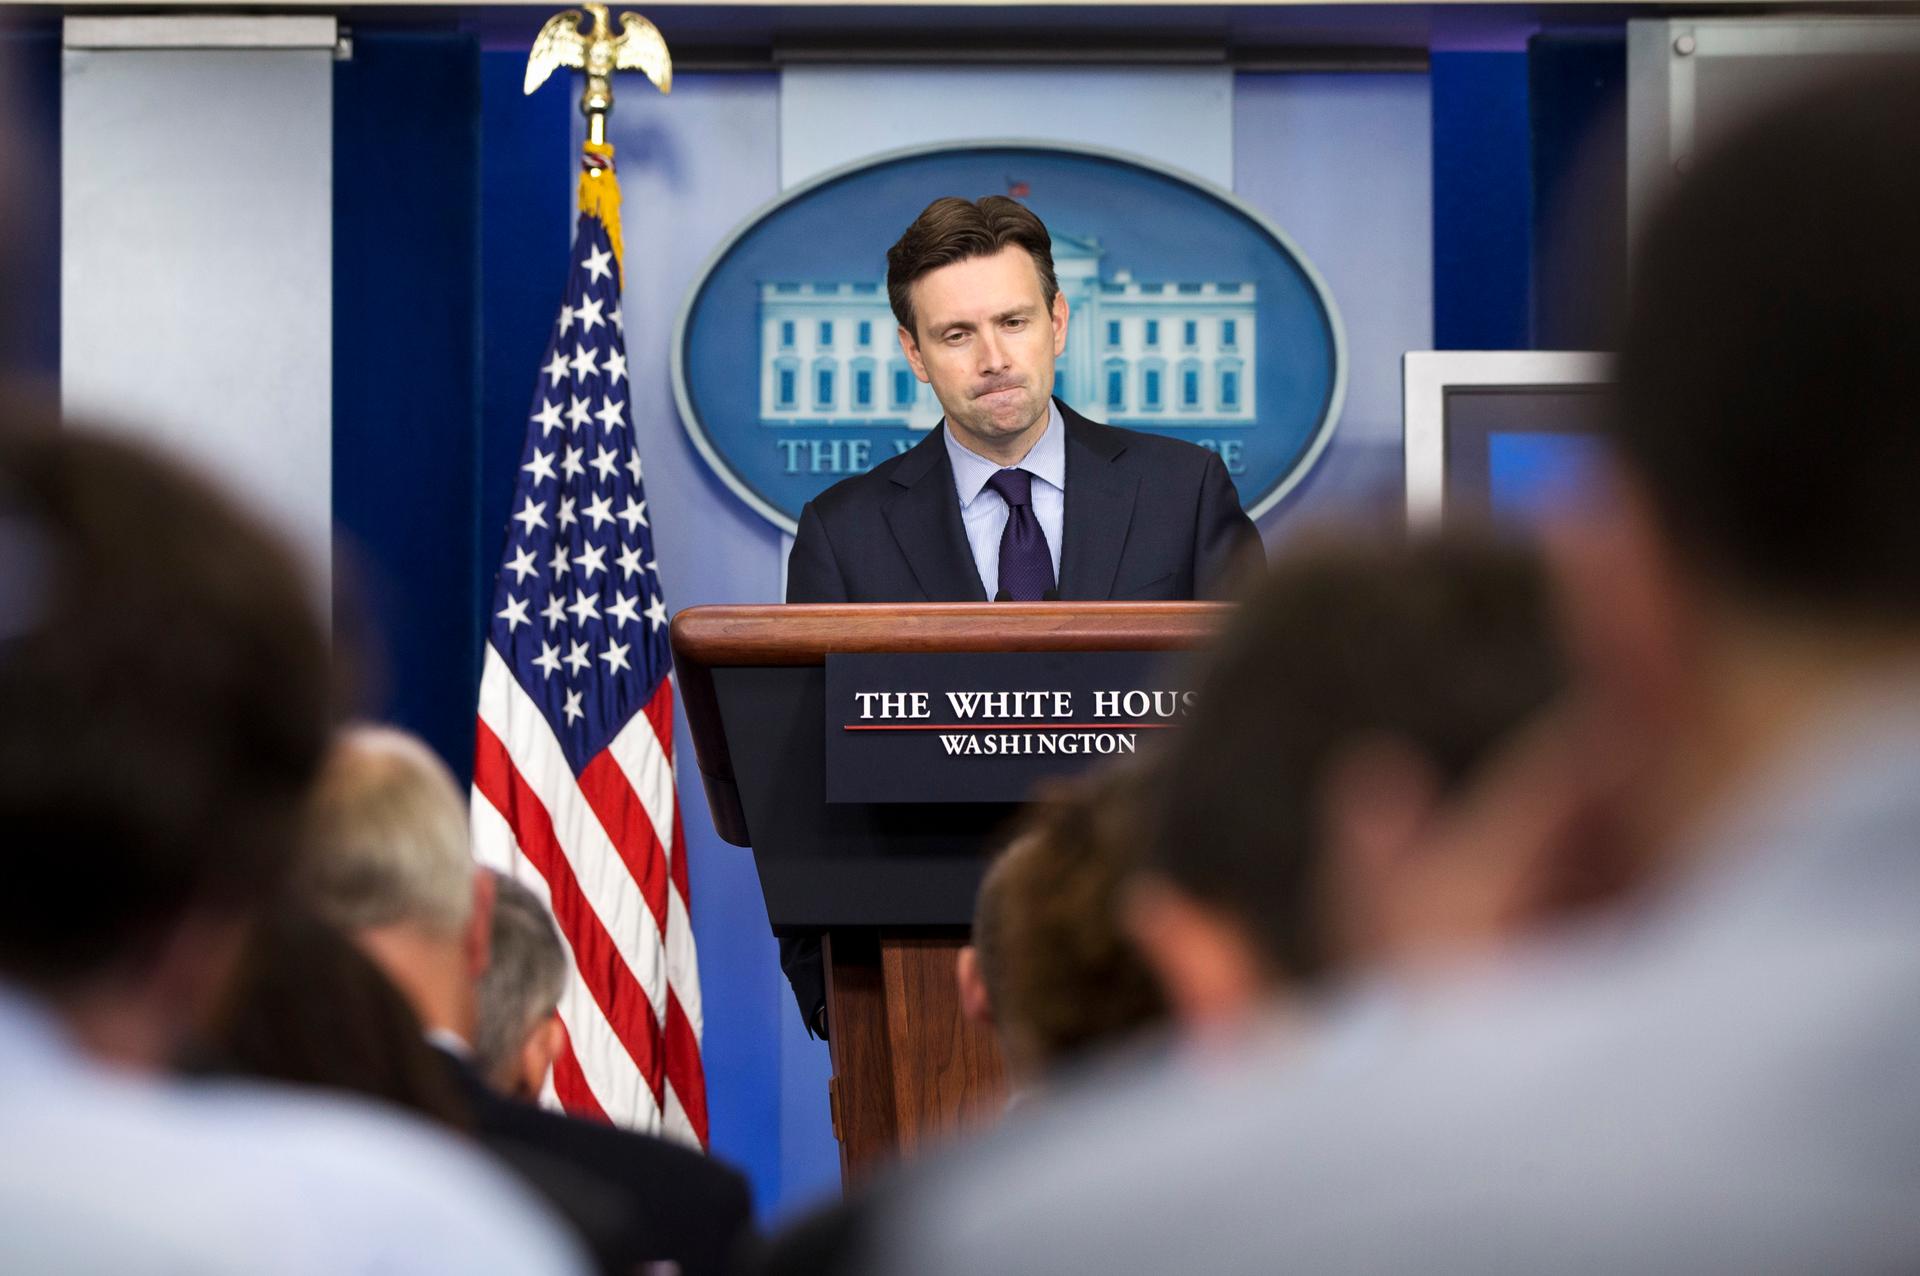 White House press secretary Josh Earnest